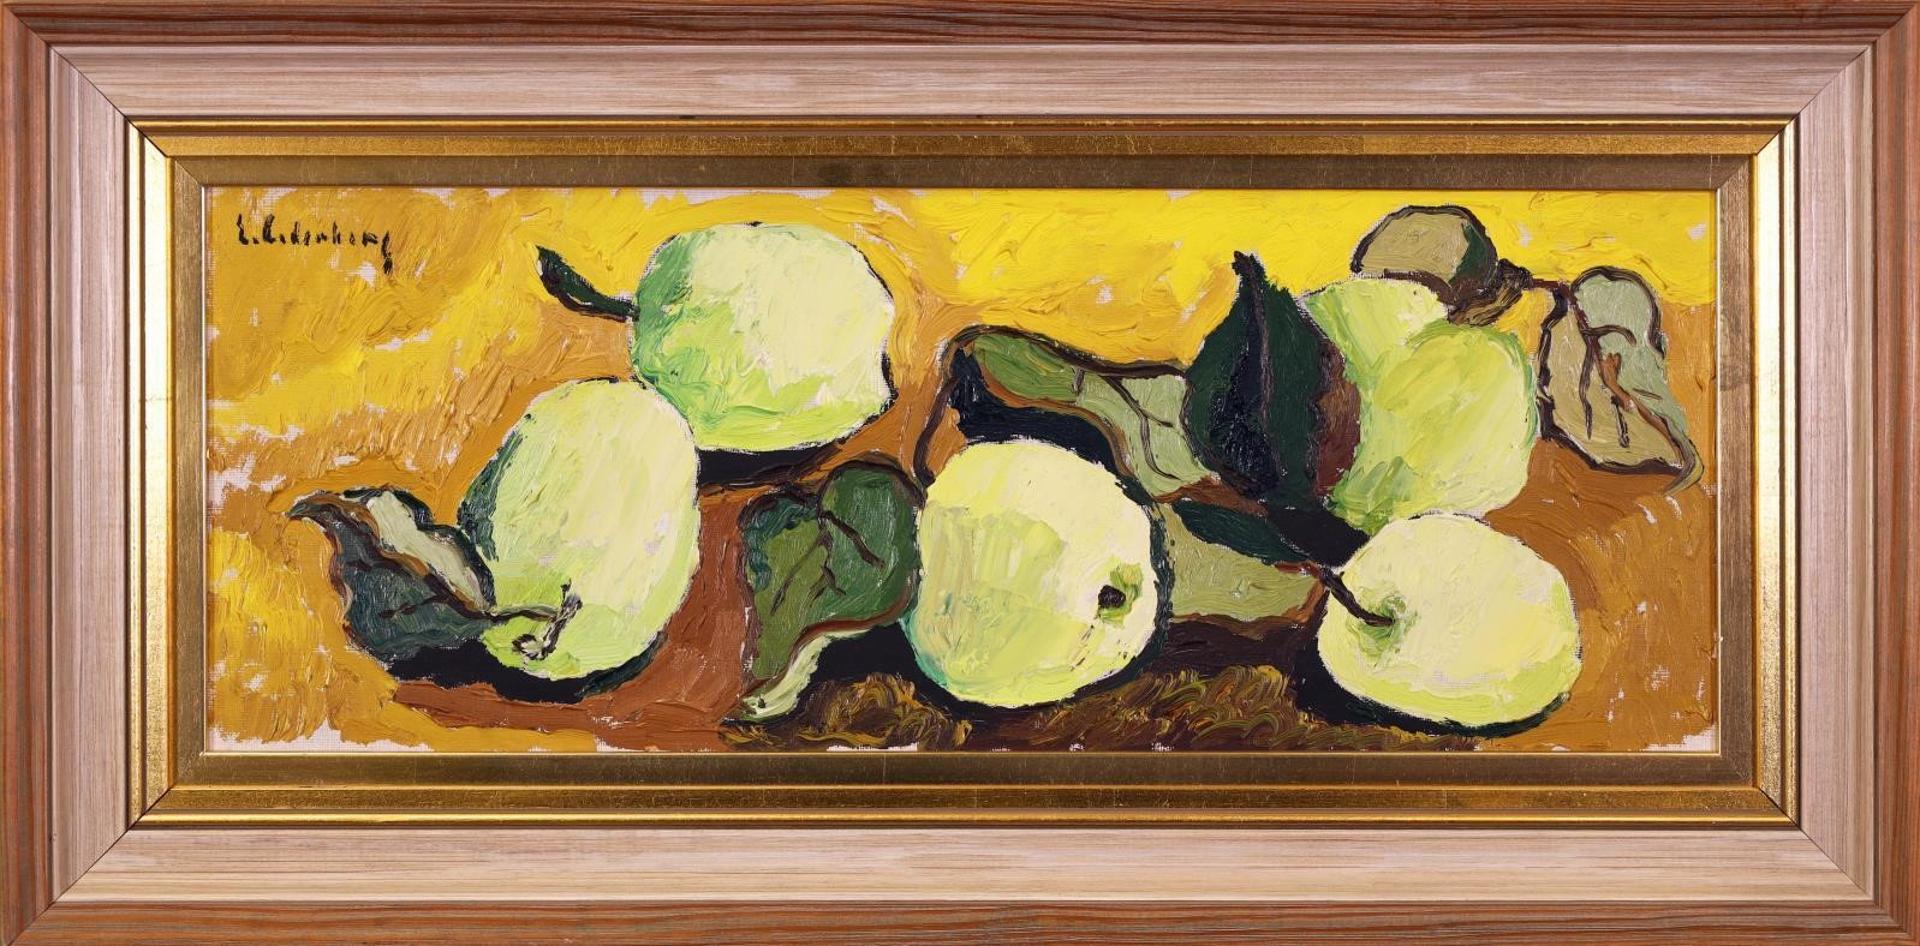 Eric Cederberg (1897-1984) - “Still Life with Green Apples”